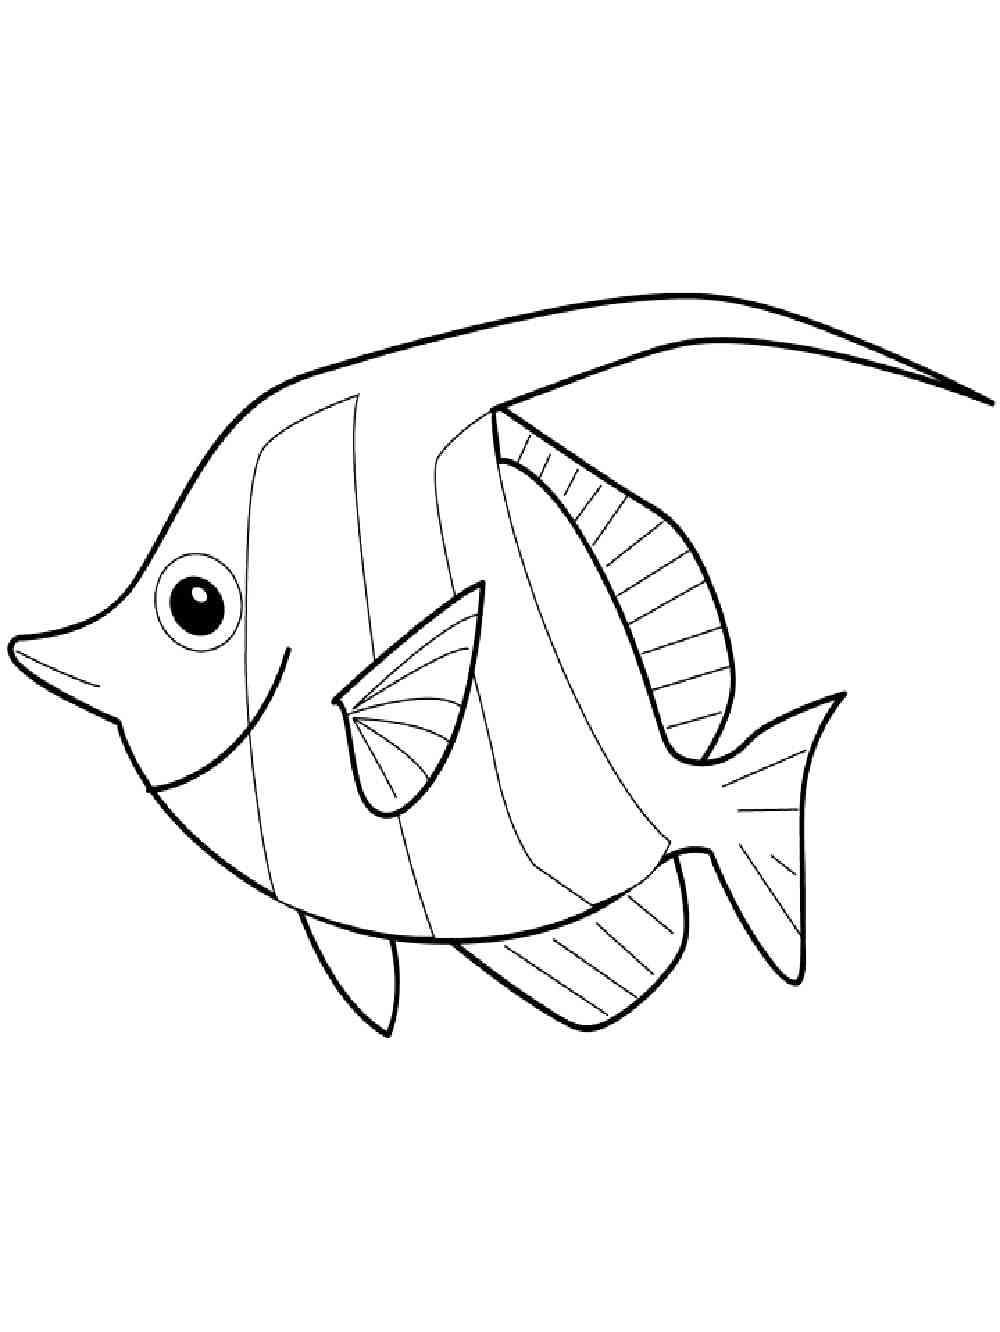 Altum Angelfish coloring page